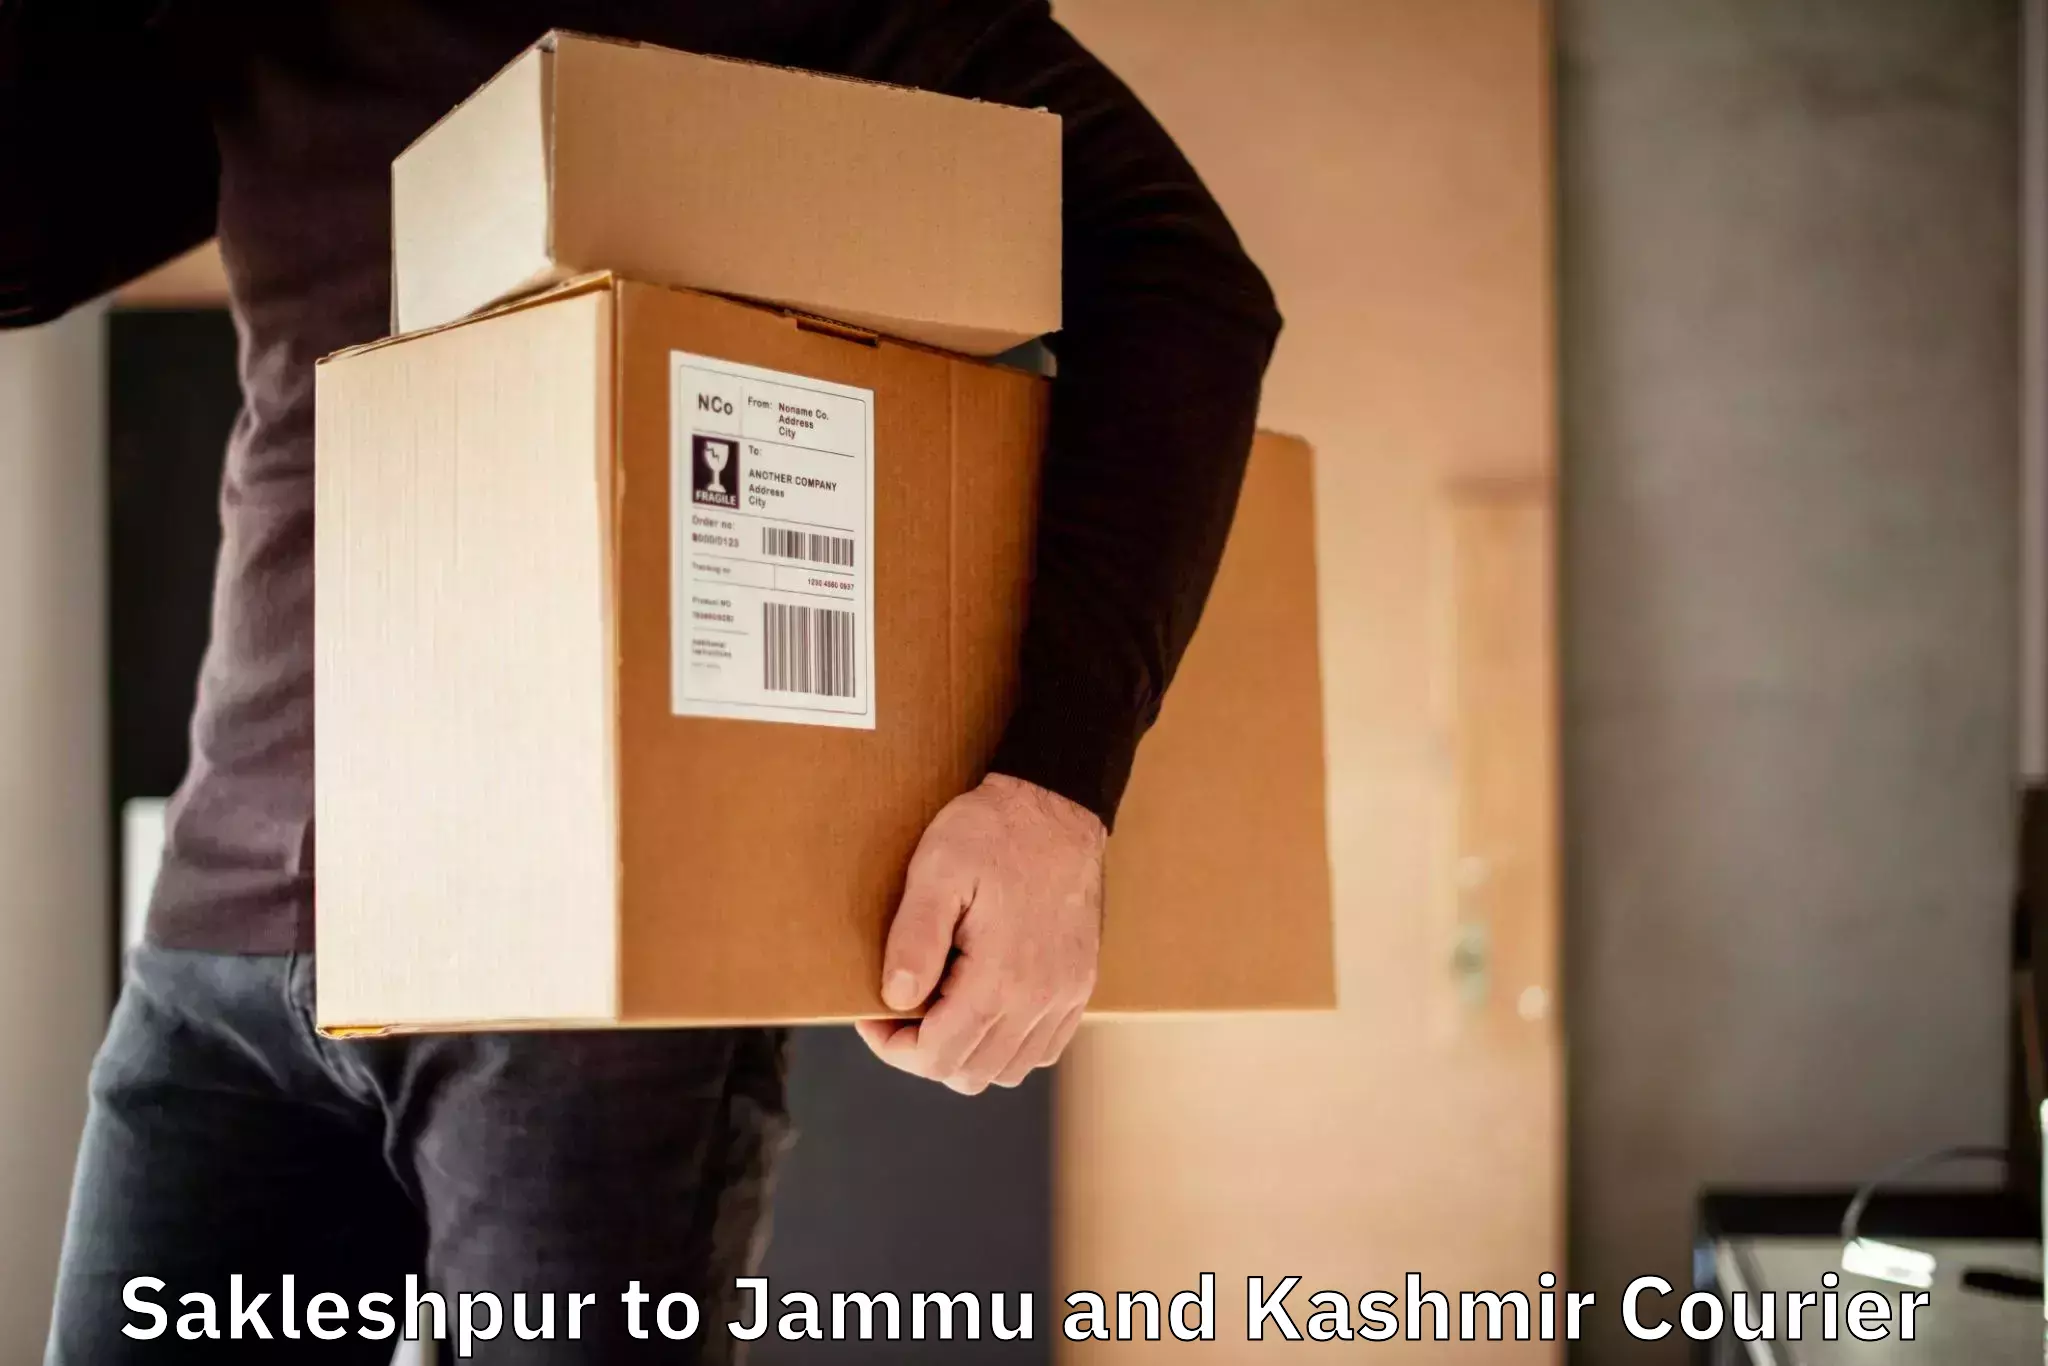 Digital courier platforms Sakleshpur to Srinagar Kashmir